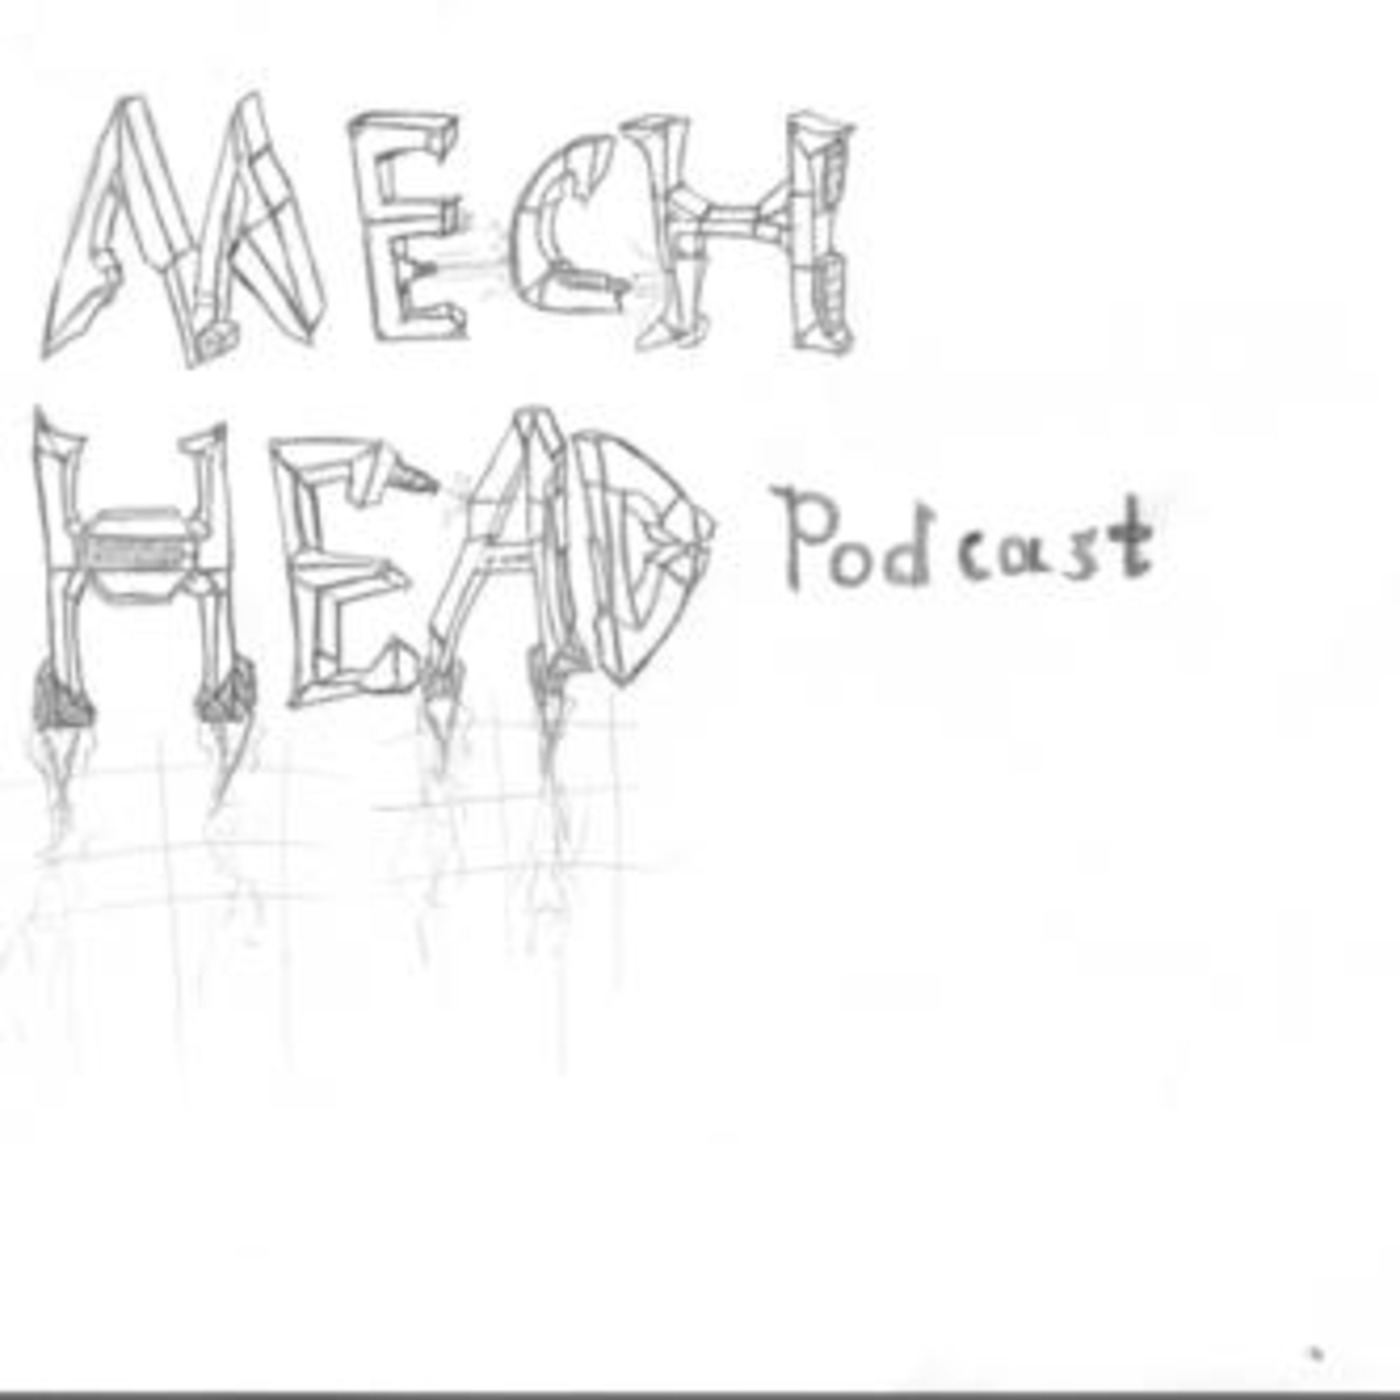 MechHead Podcast #30!